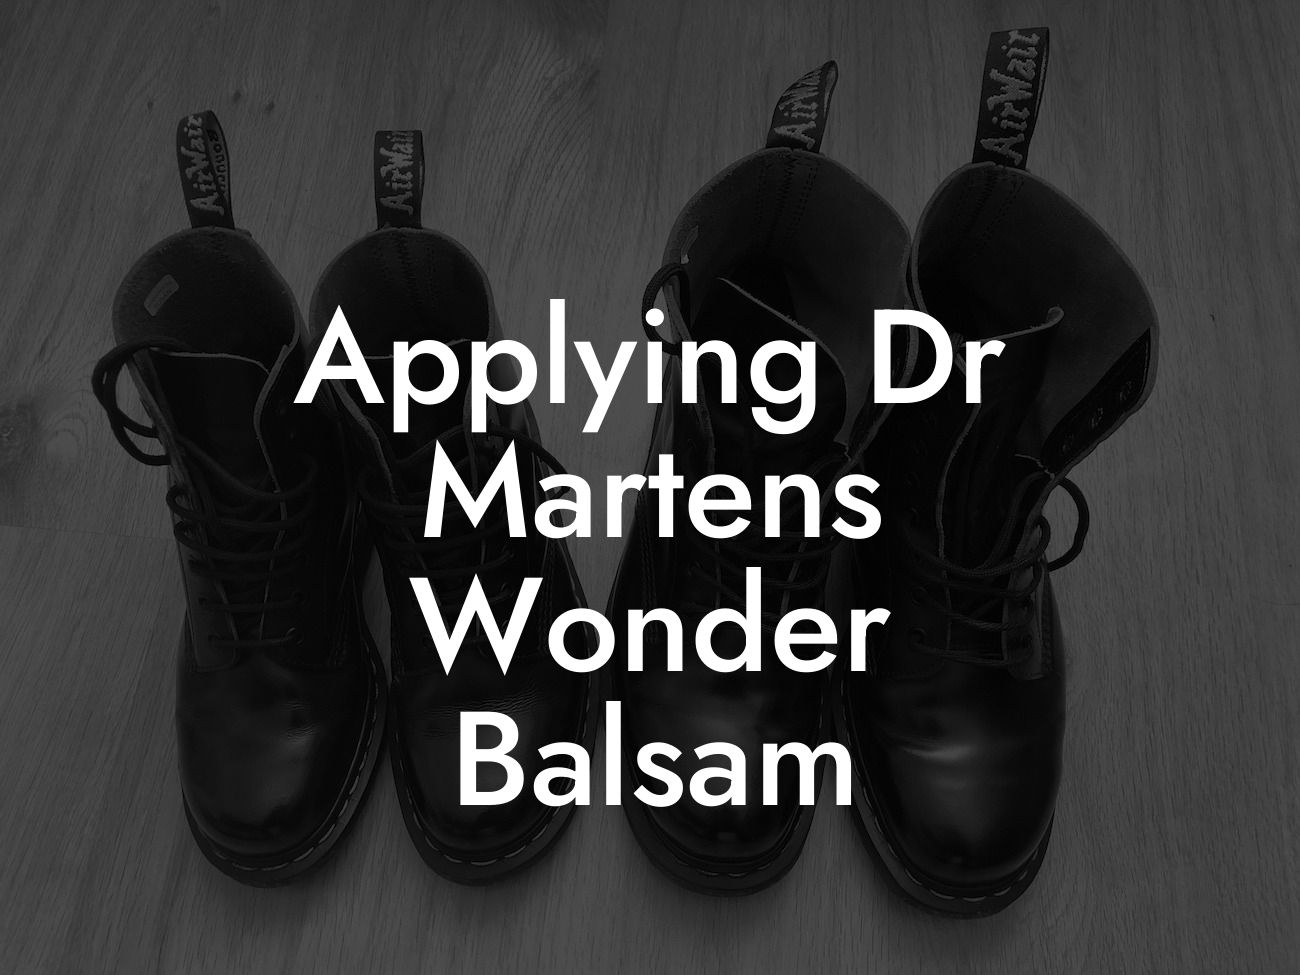 Applying Dr Martens Wonder Balsam